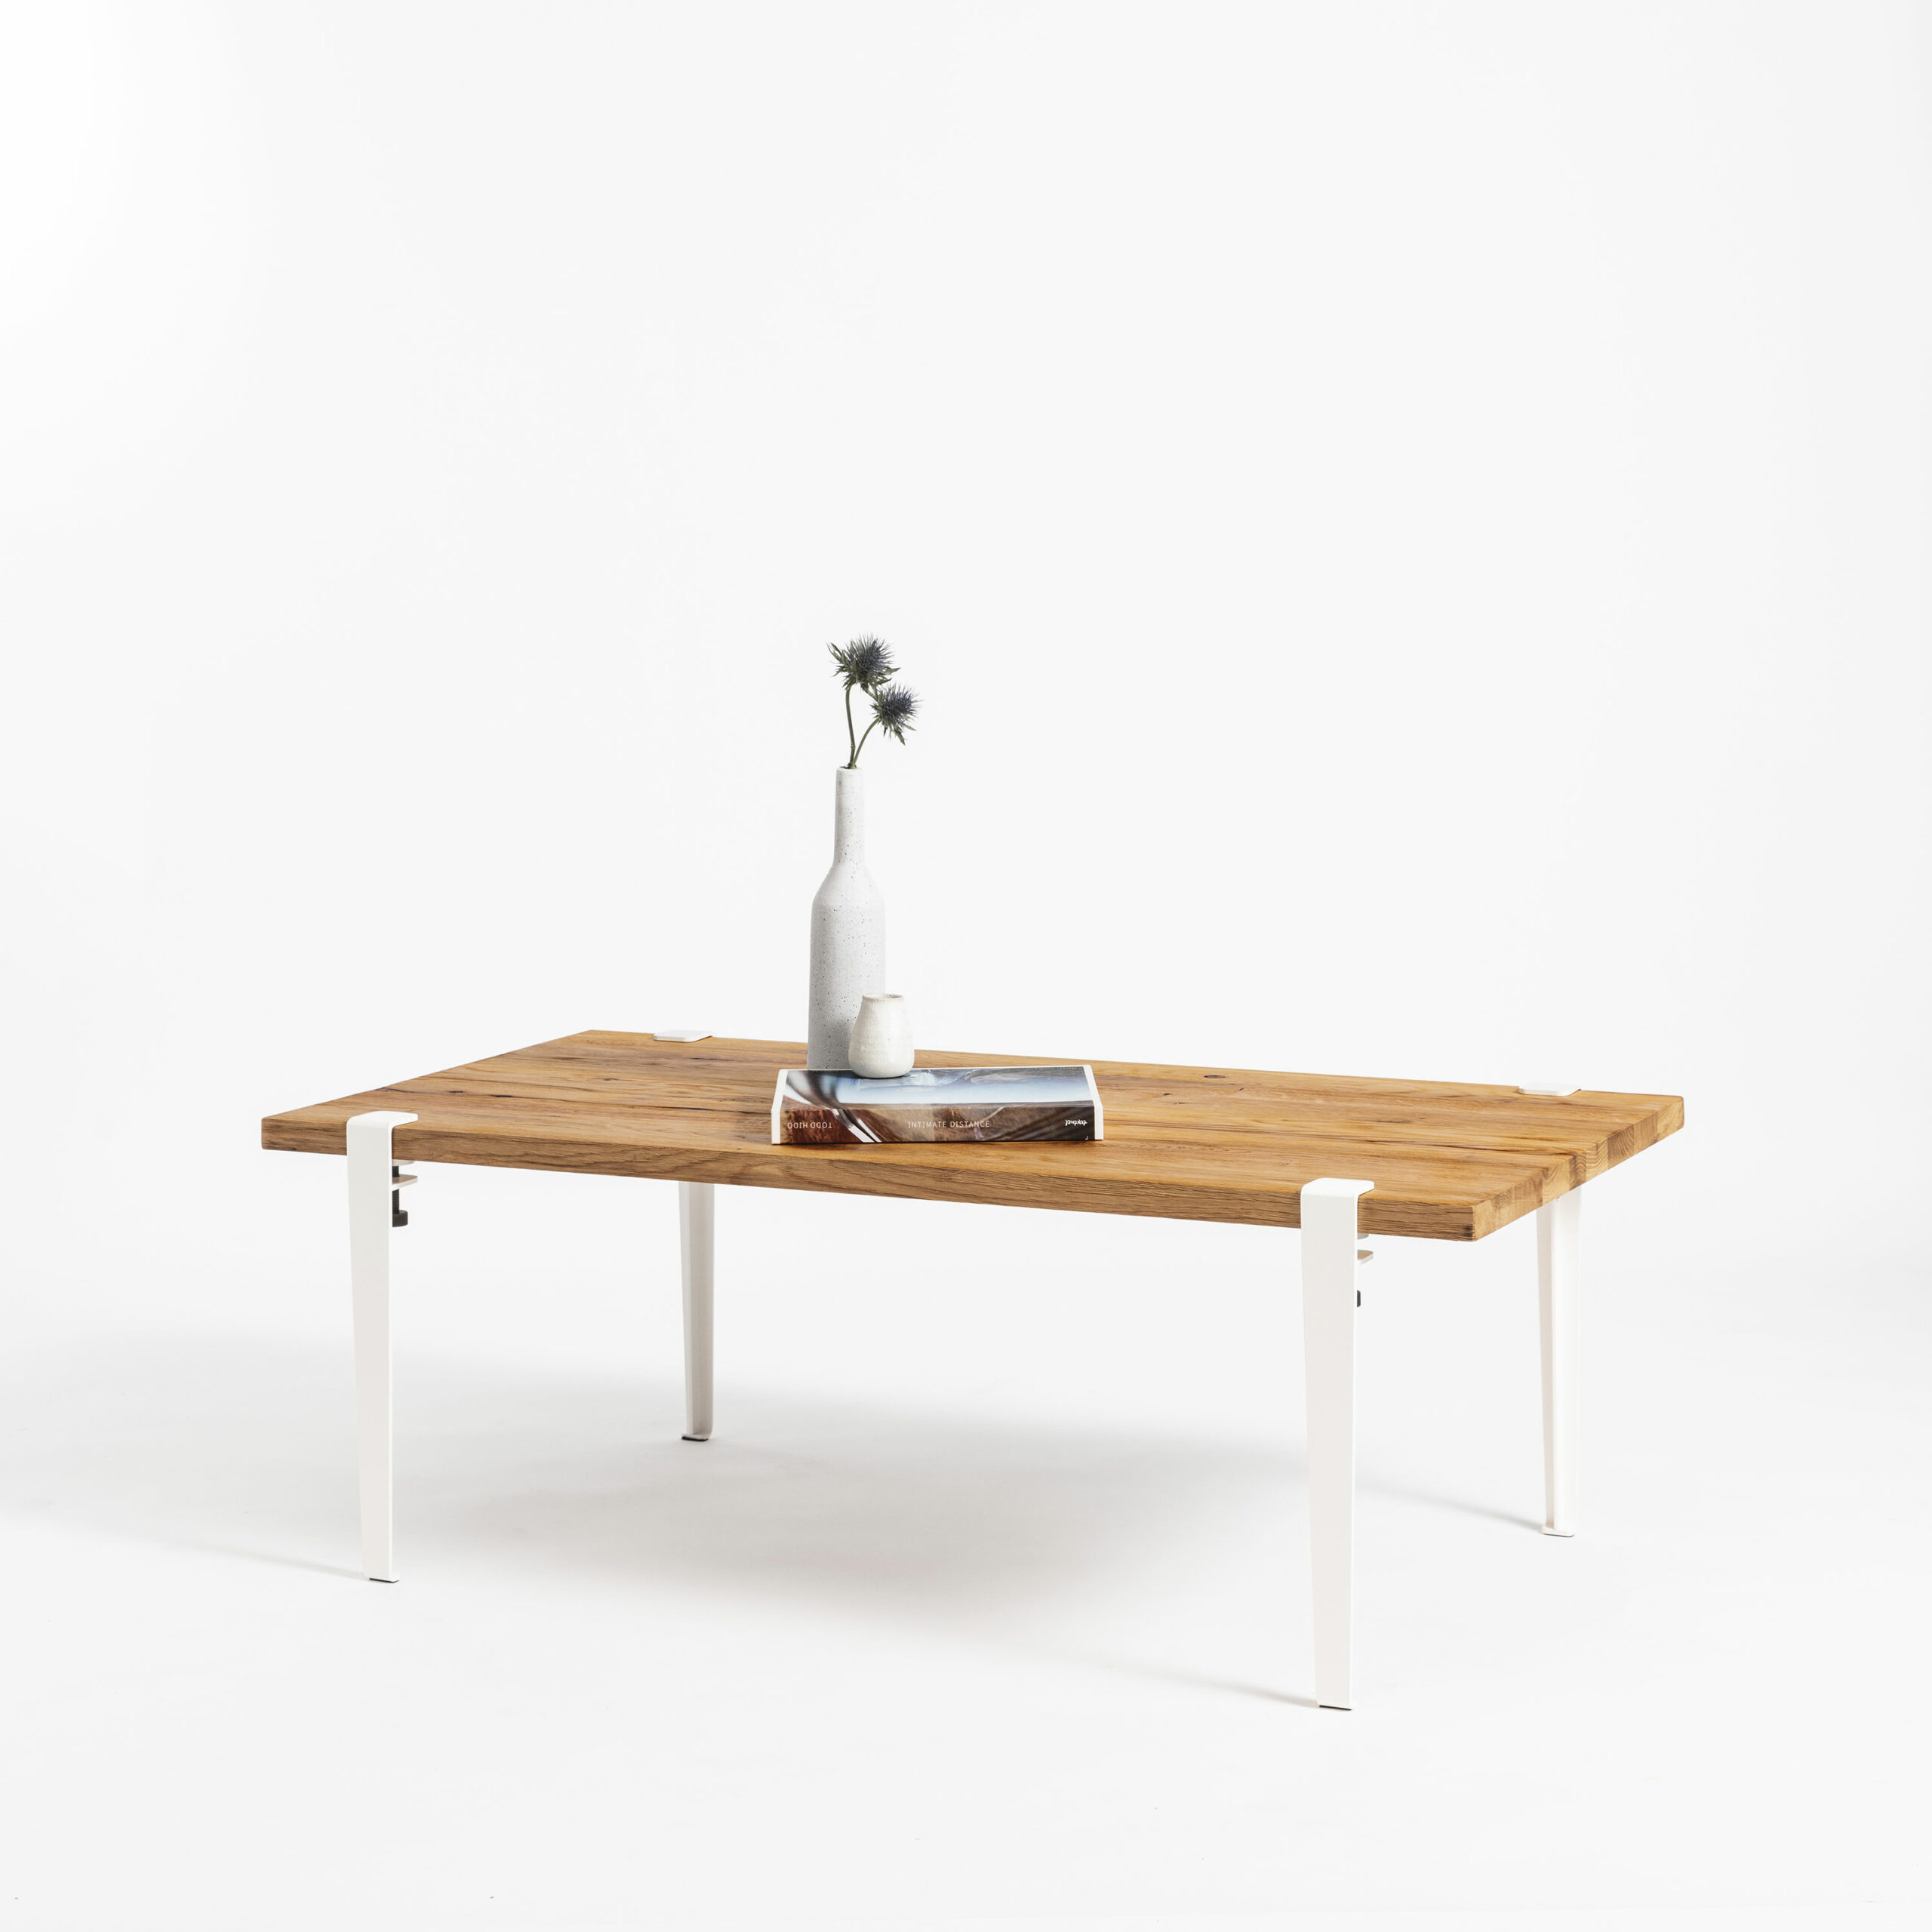 Old wood coffee table and white steel legs TIPTOE